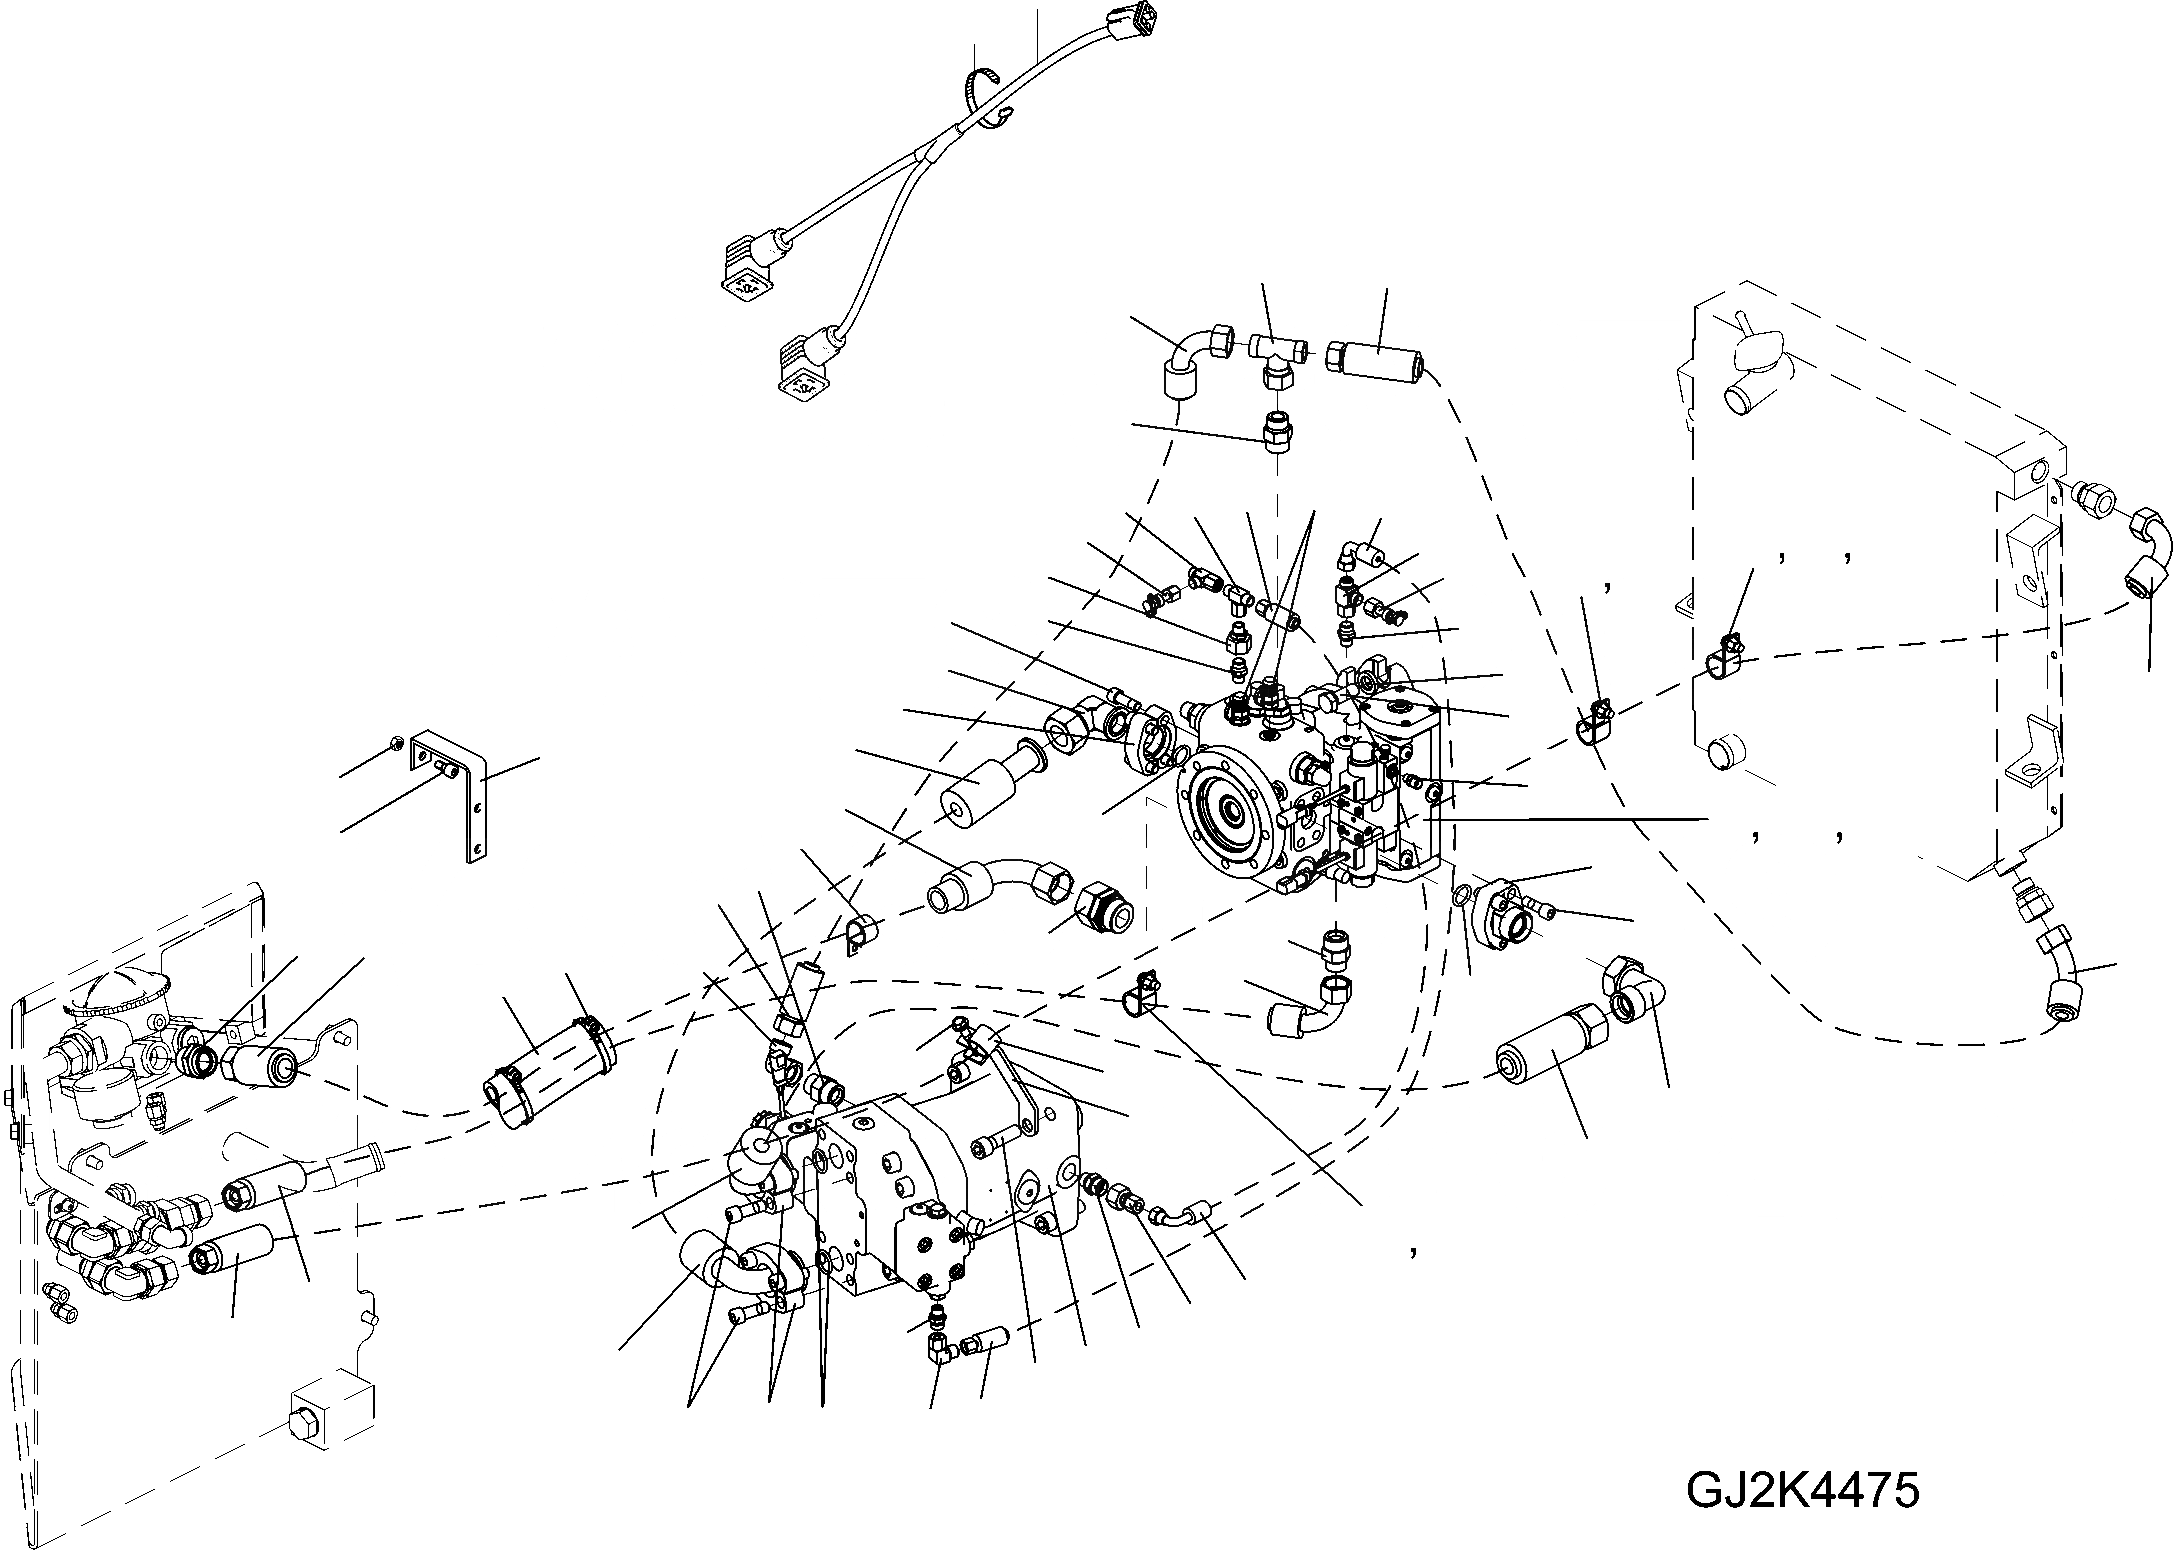 Схема запчастей Komatsu WA90-5 20 km - ГИДР. НАСОС. ПРИВОД, ТРУБЫS ТРАНСМИССИЯ, КРЕСТОВИНА